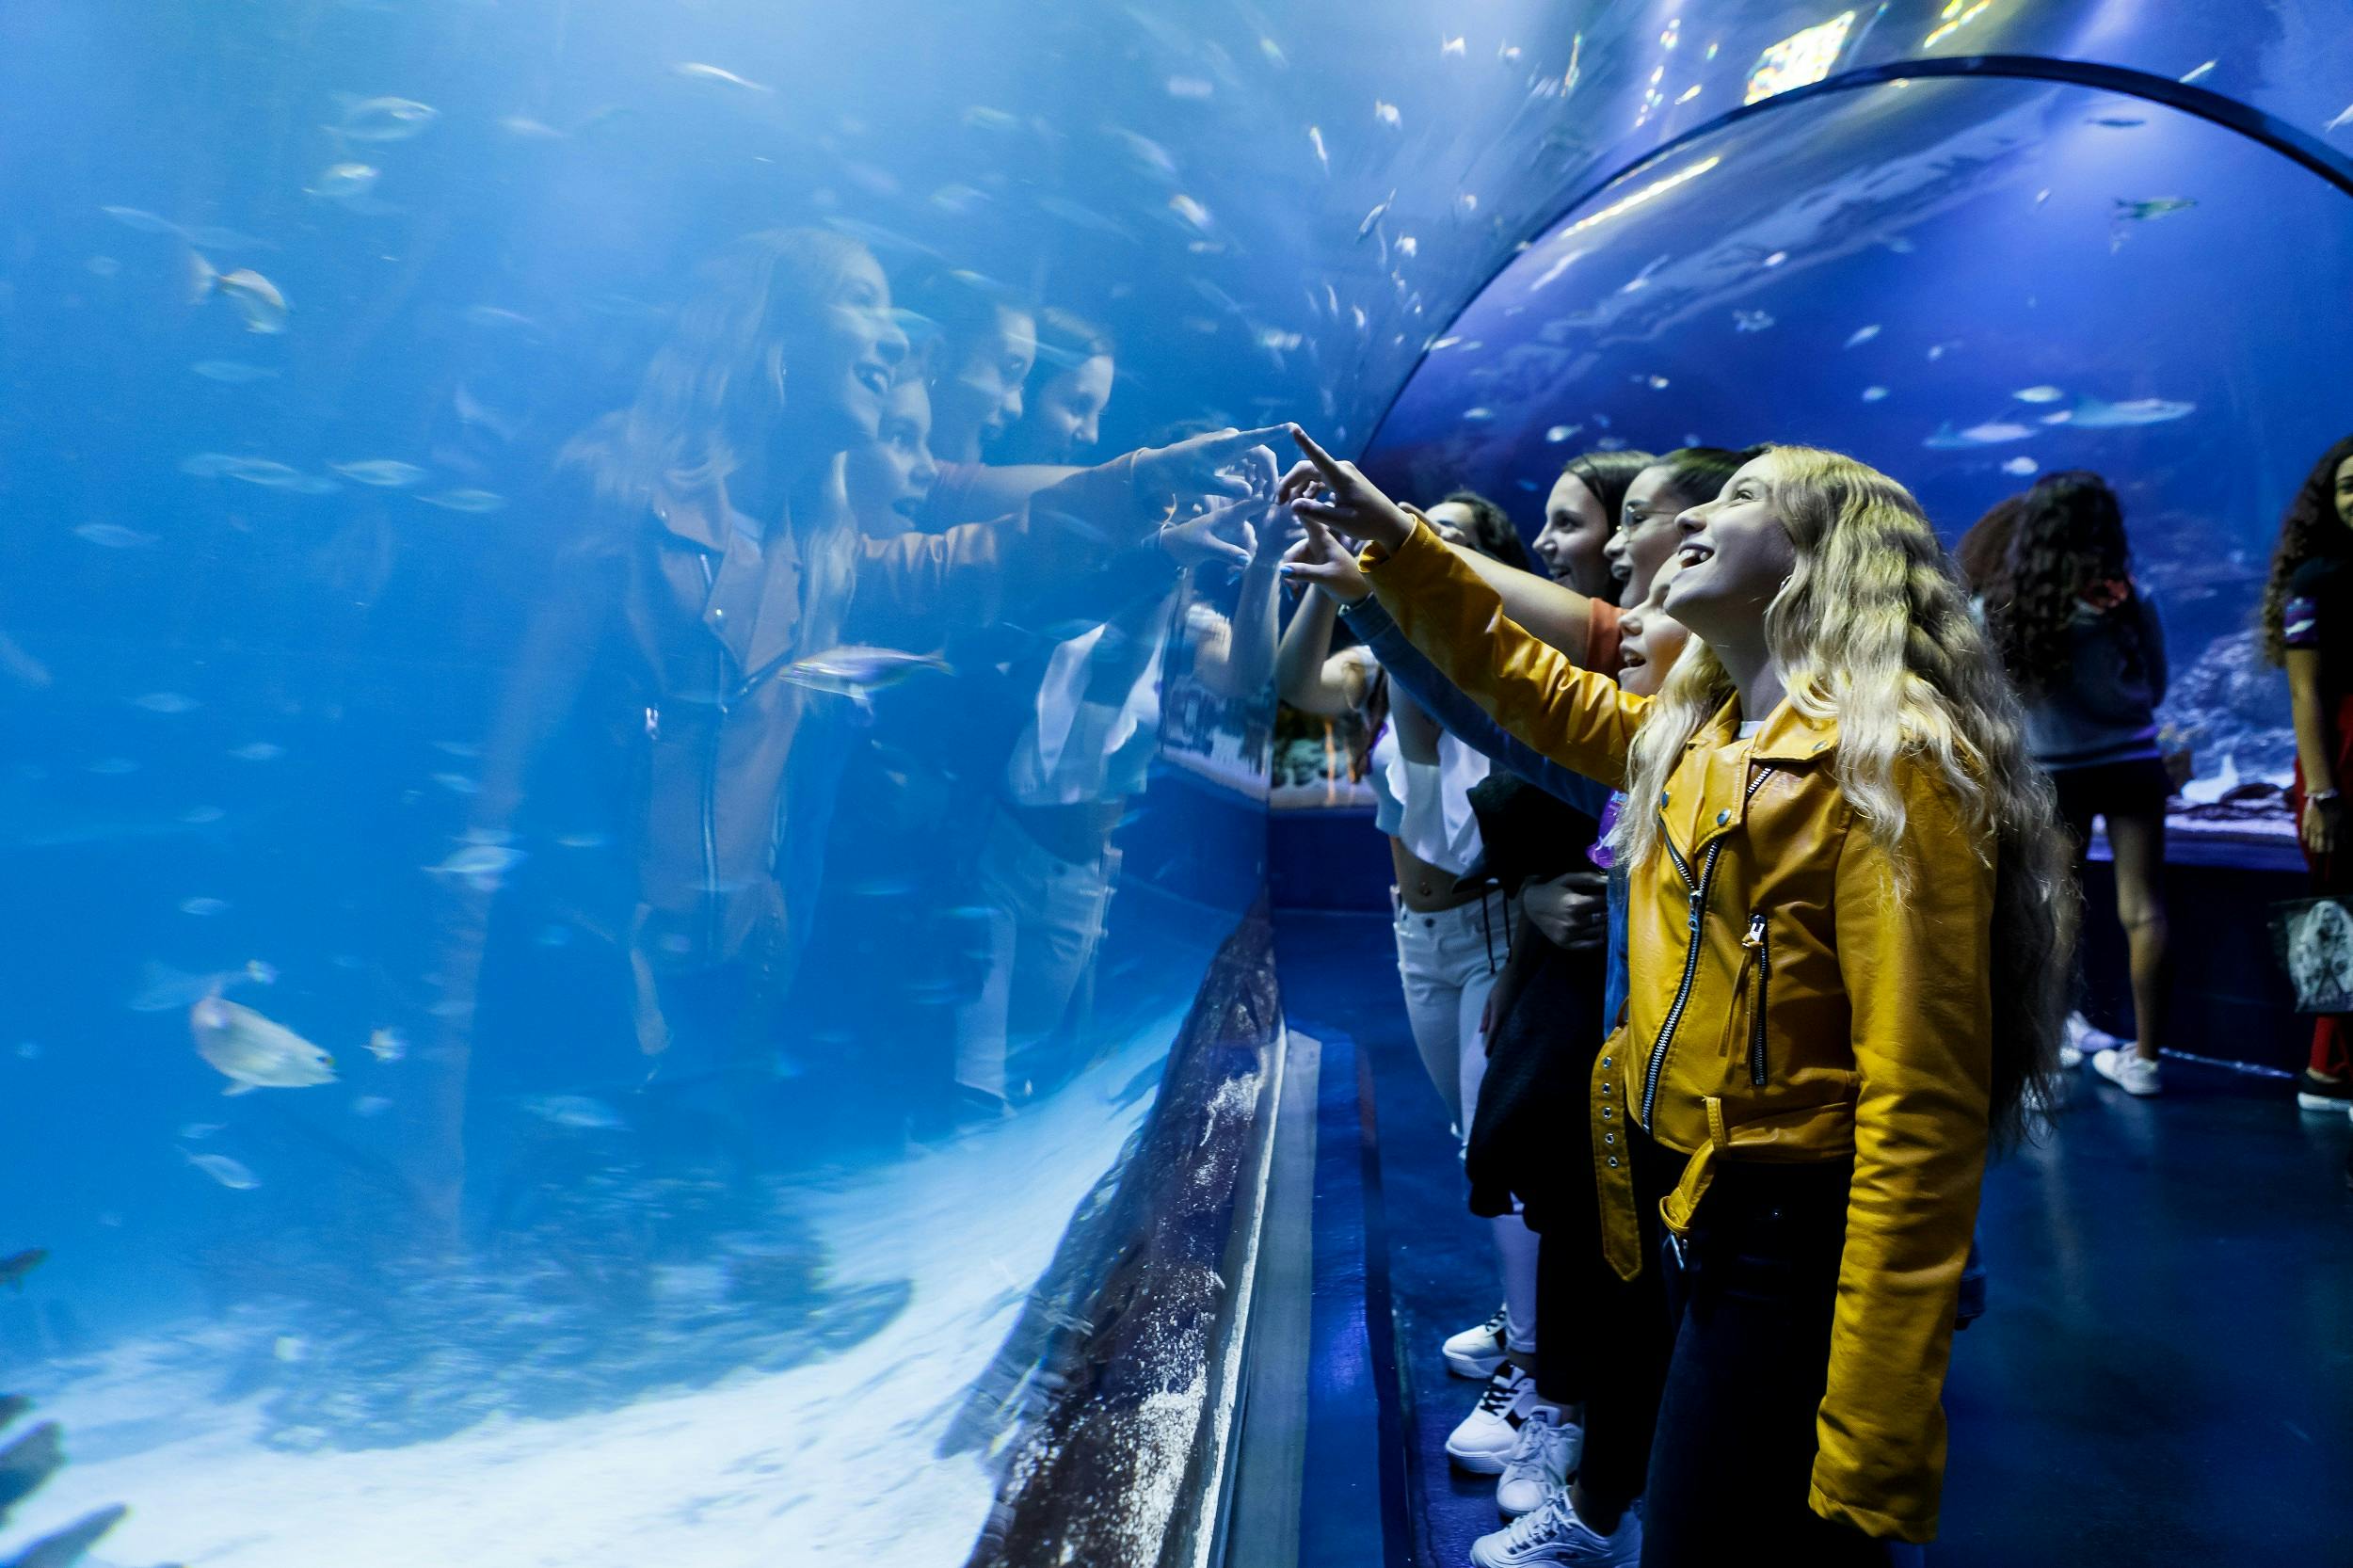 Toegangskaarten voor het Atlantis Aquarium in Madrid